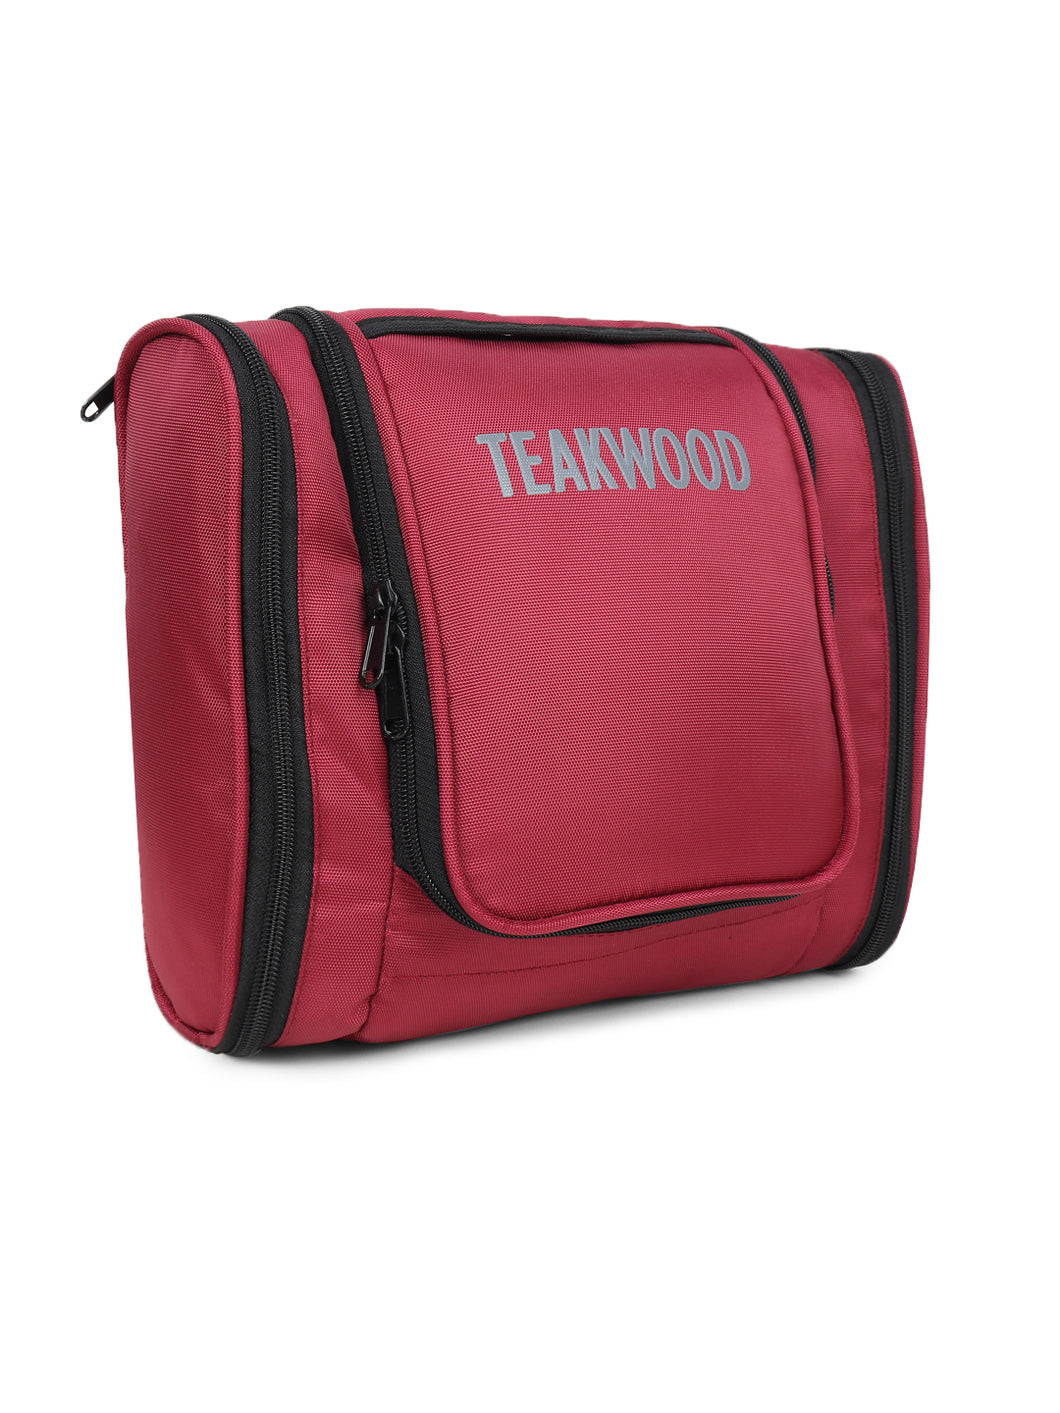 Teakwood Polyester Toiletry Kit Bag Magenta